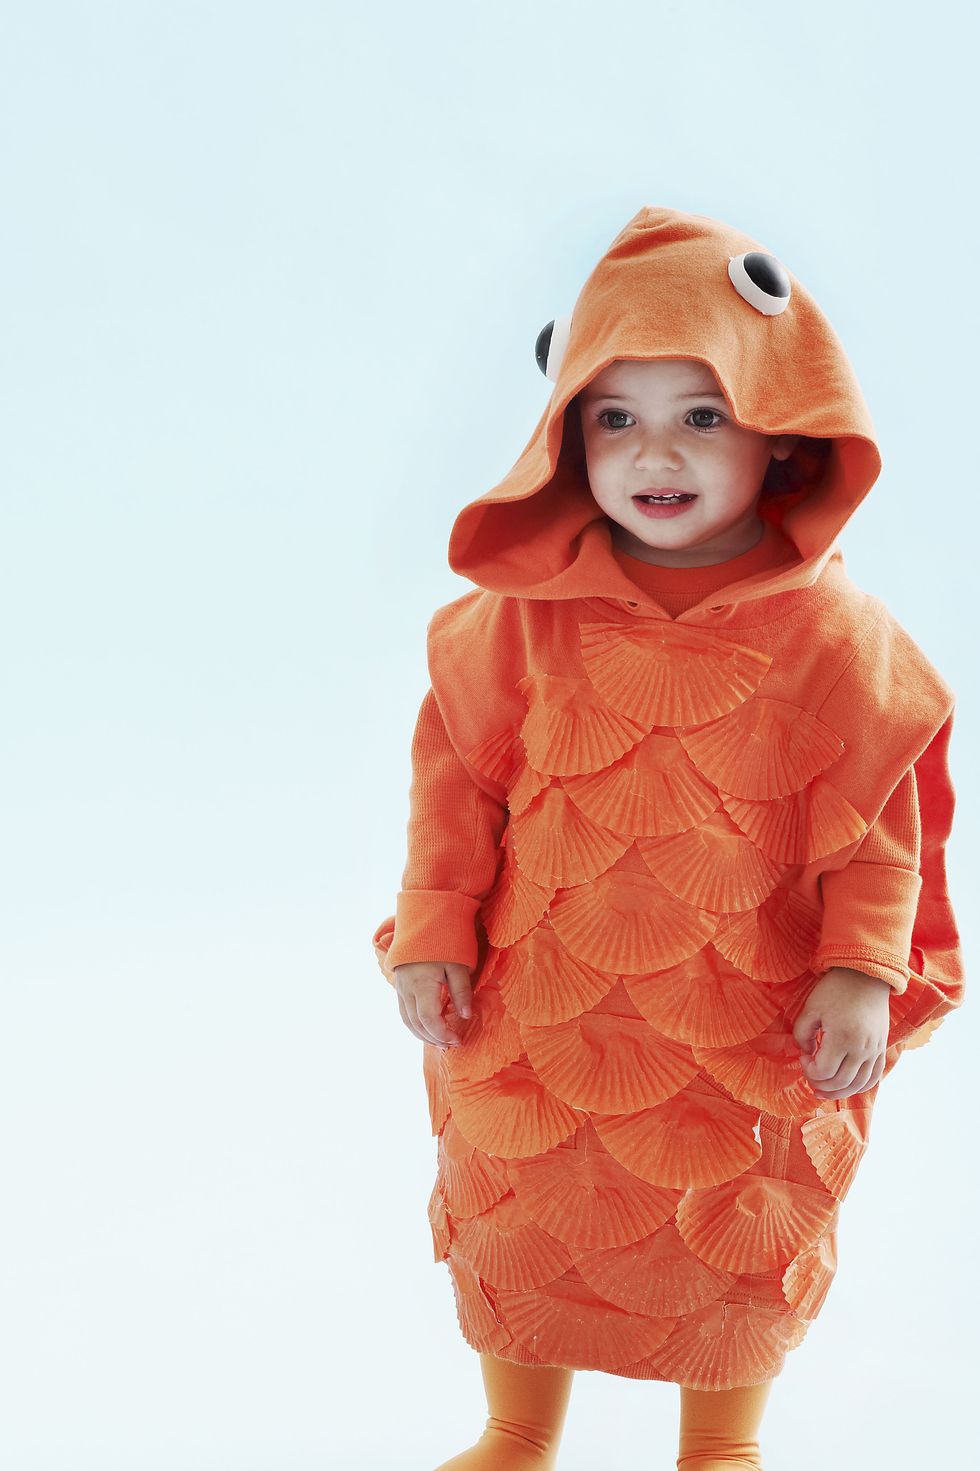 The Ultimate DIY Halloween Kids Costume Ideas — meer